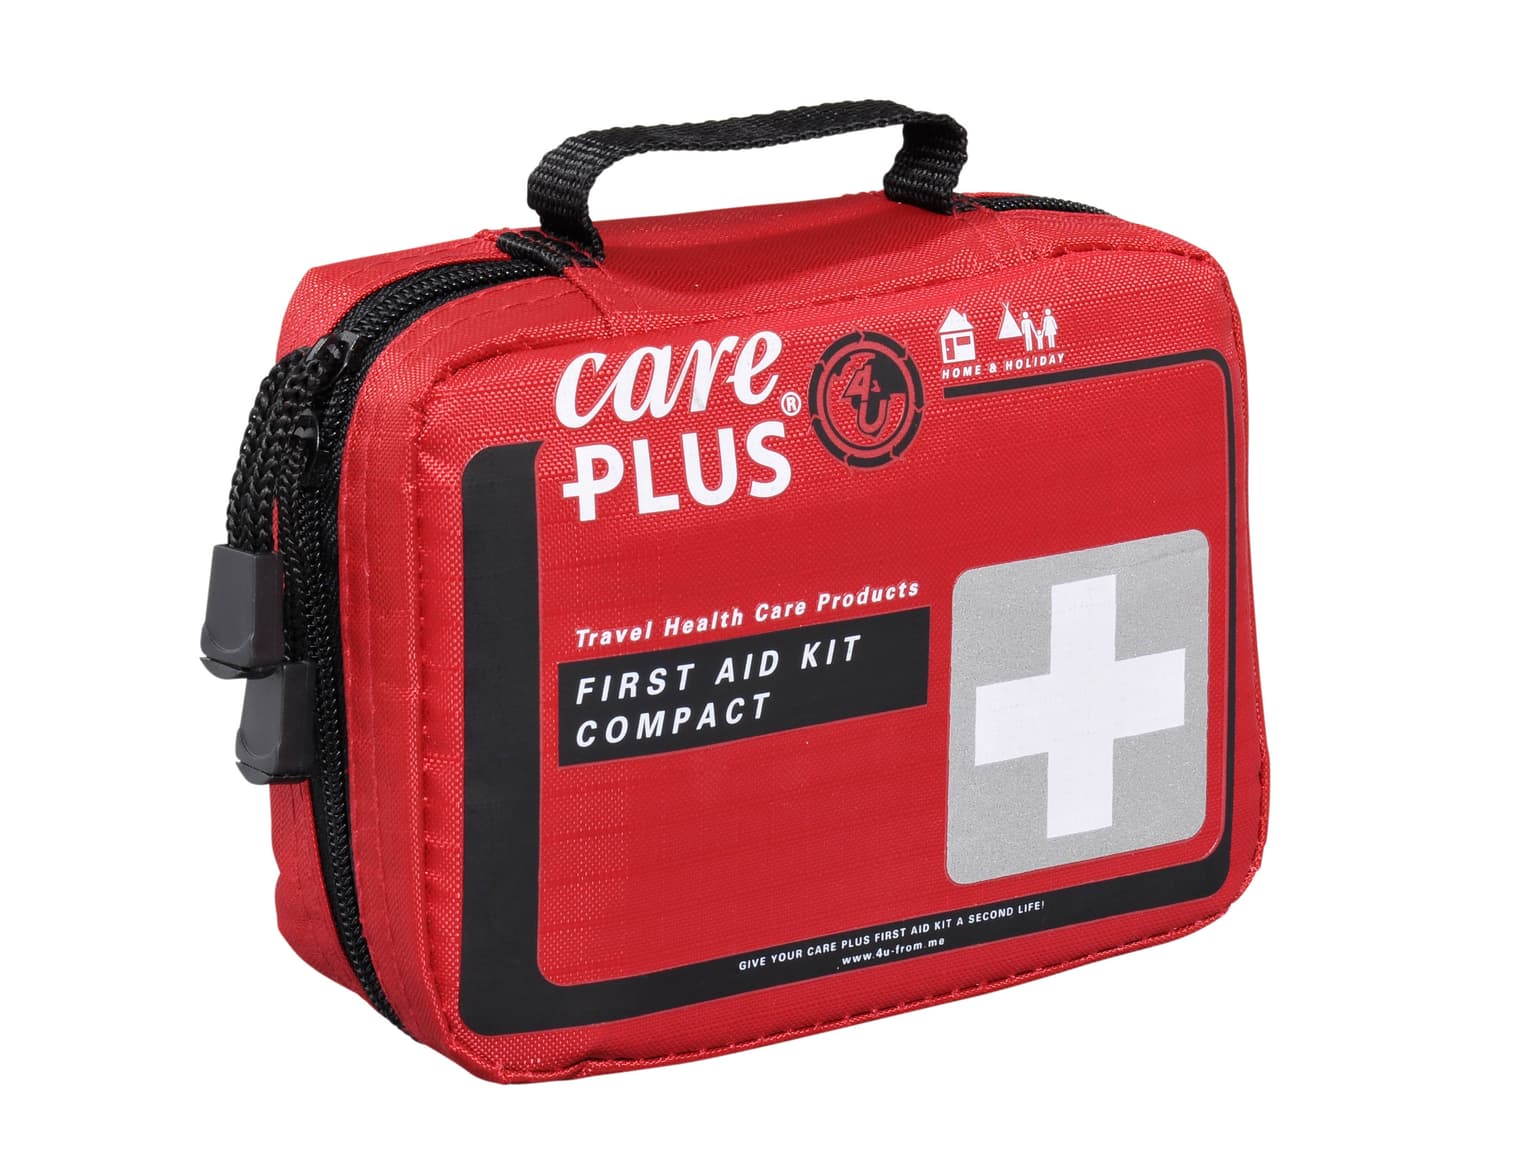 Care Plus Care Plus First Aid Kit Compact Erste Hilfe Set 1